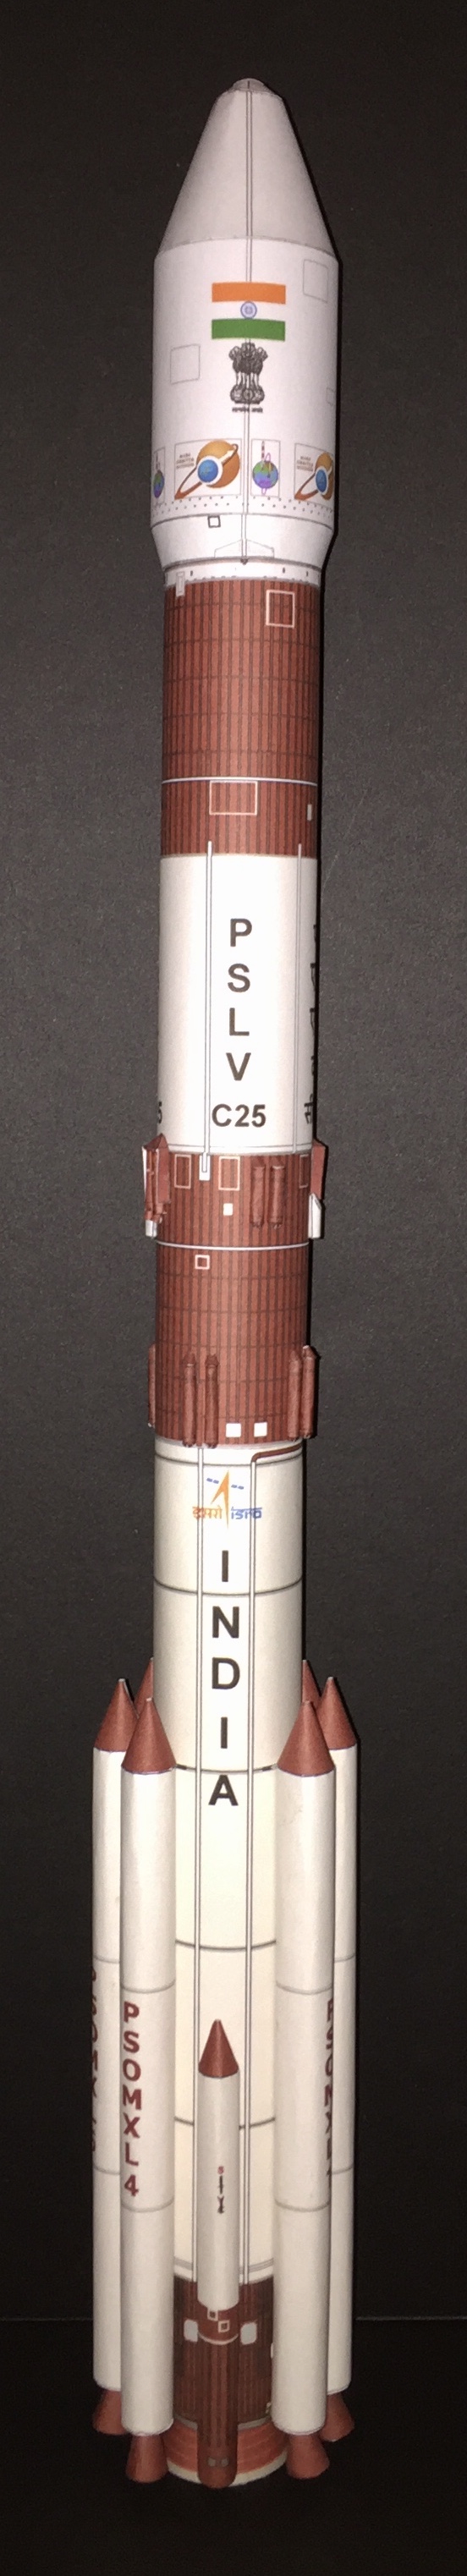 PSLV C25-image